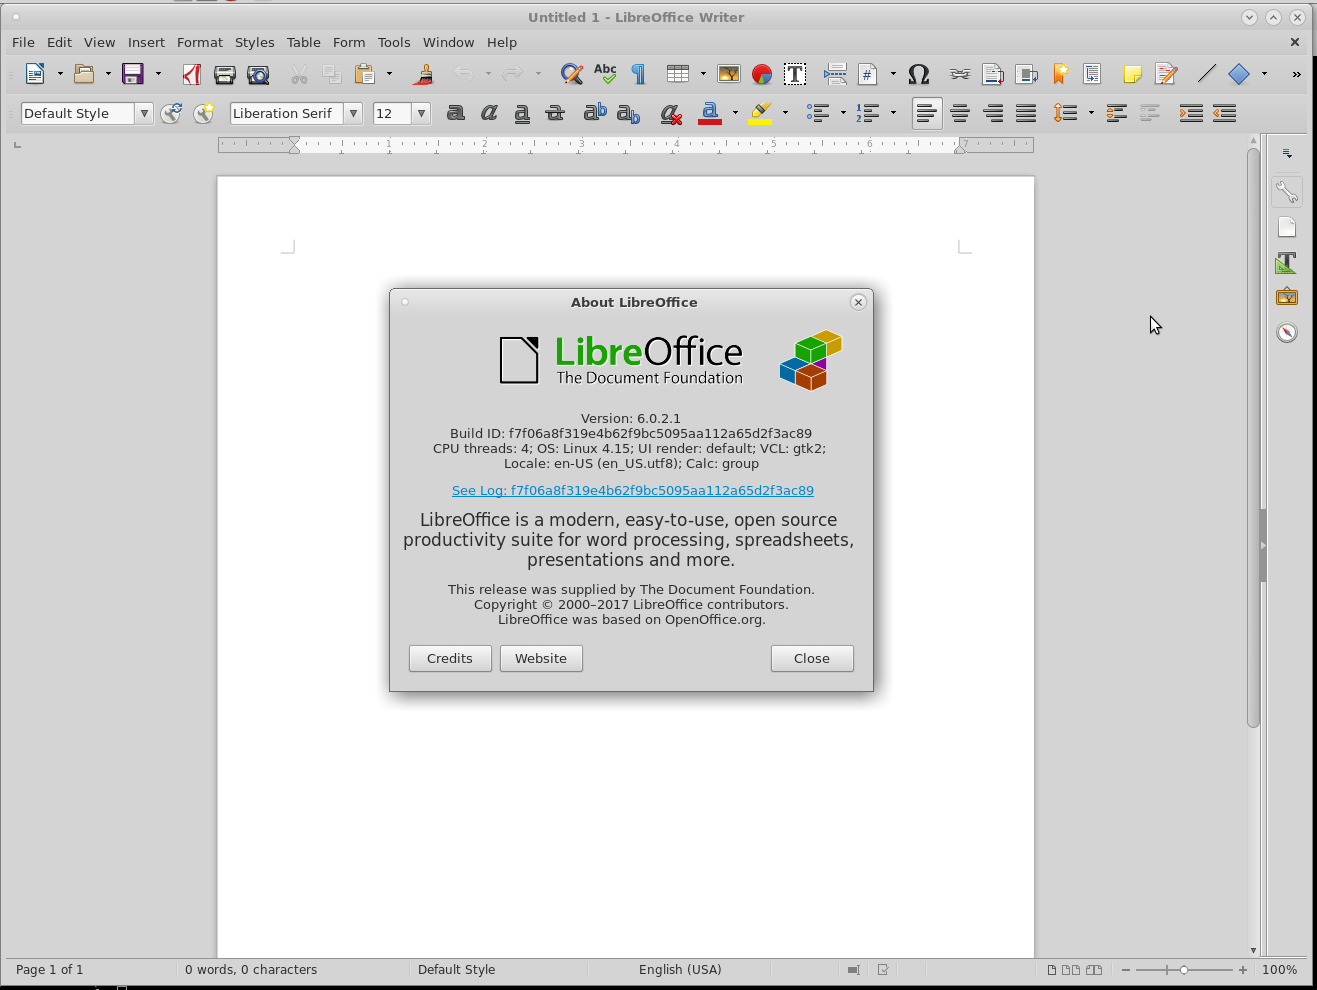 HowTo Update OpenOffice LibreOffice under Linux – deb rpm Debian Ubuntu RedHat Fedora CentOS7